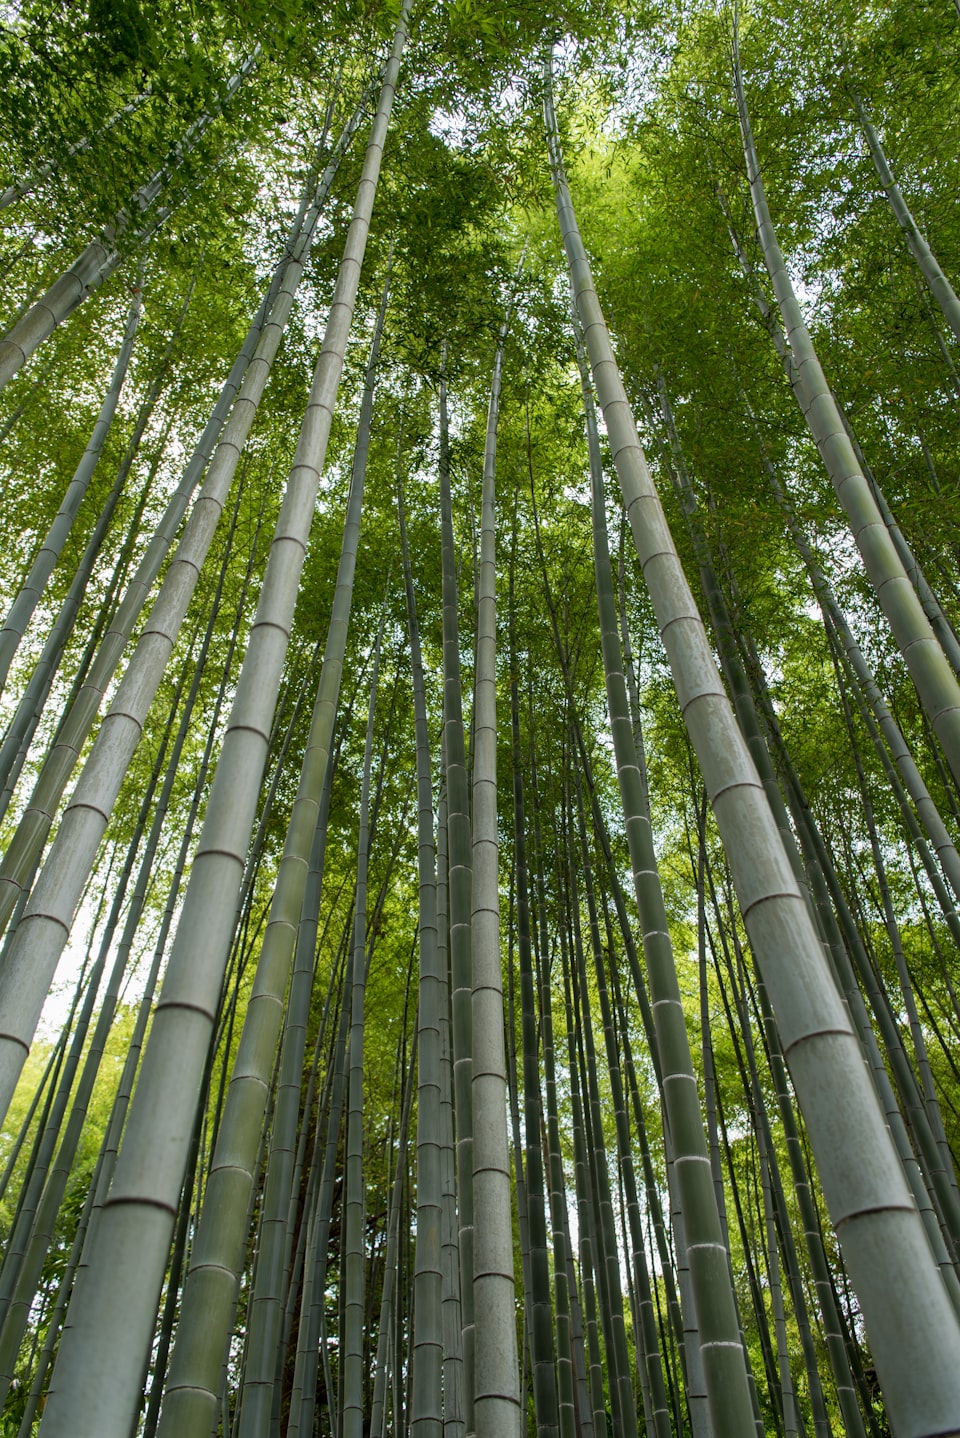 Artificial intelligence, natural bamboo